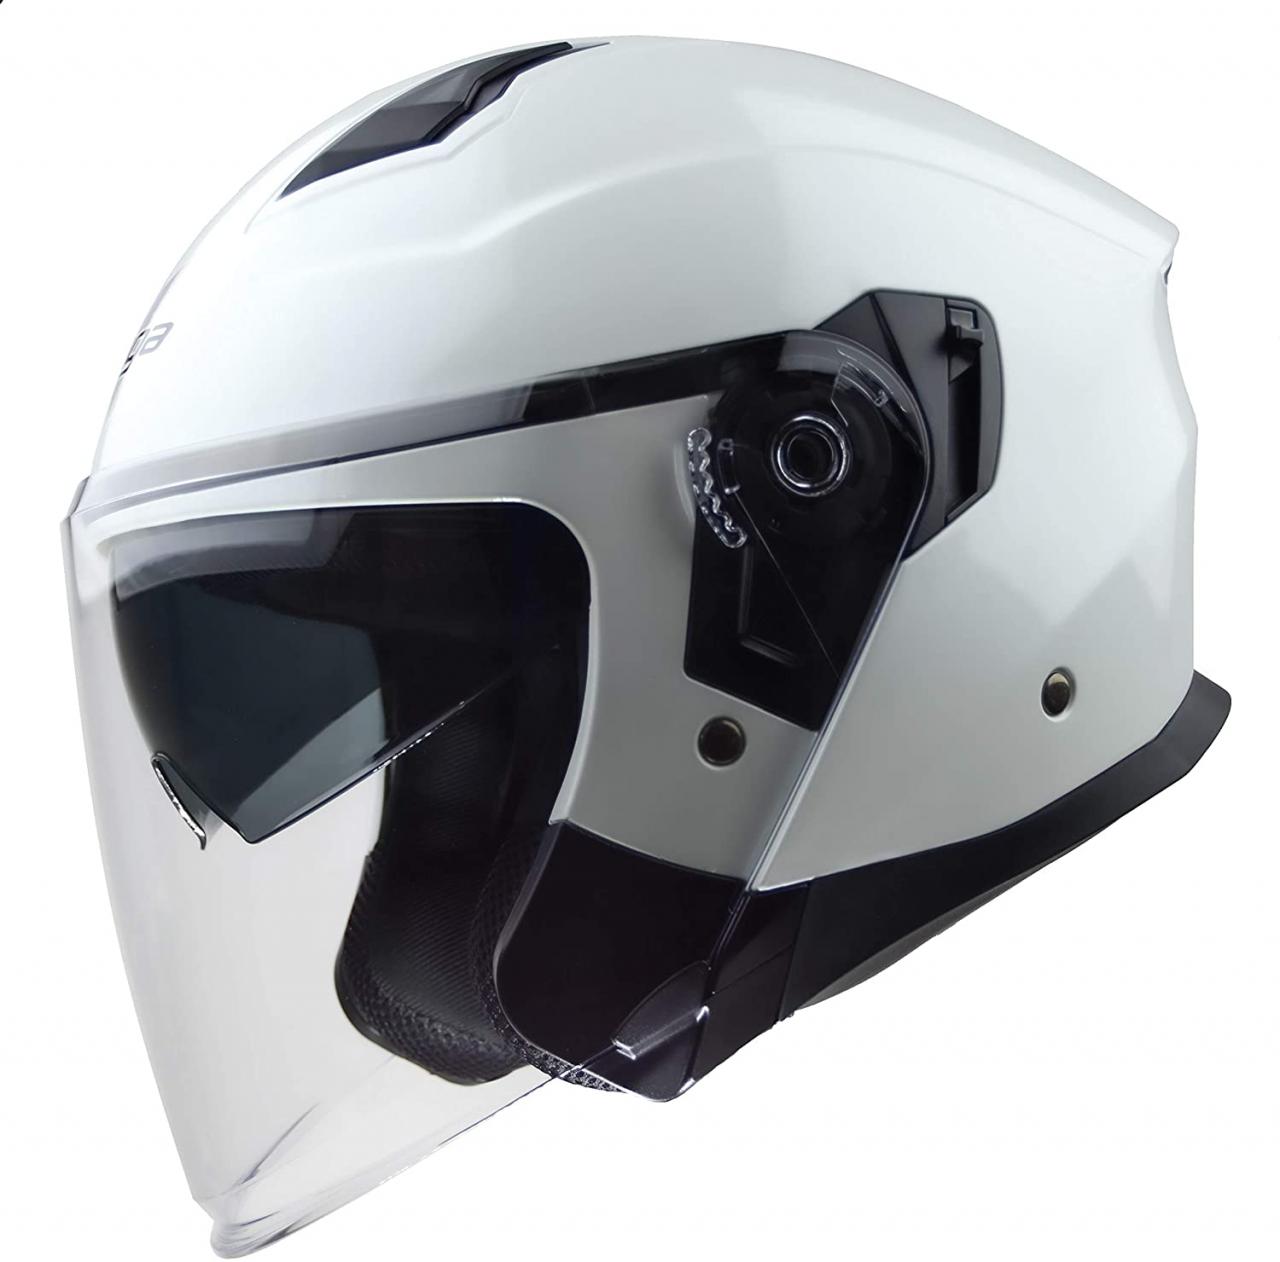 Buy Vega Helmets Unisex-Adult Open Face Motorcycle Helmet Online in  Indonesia. B07ZPDBQLN